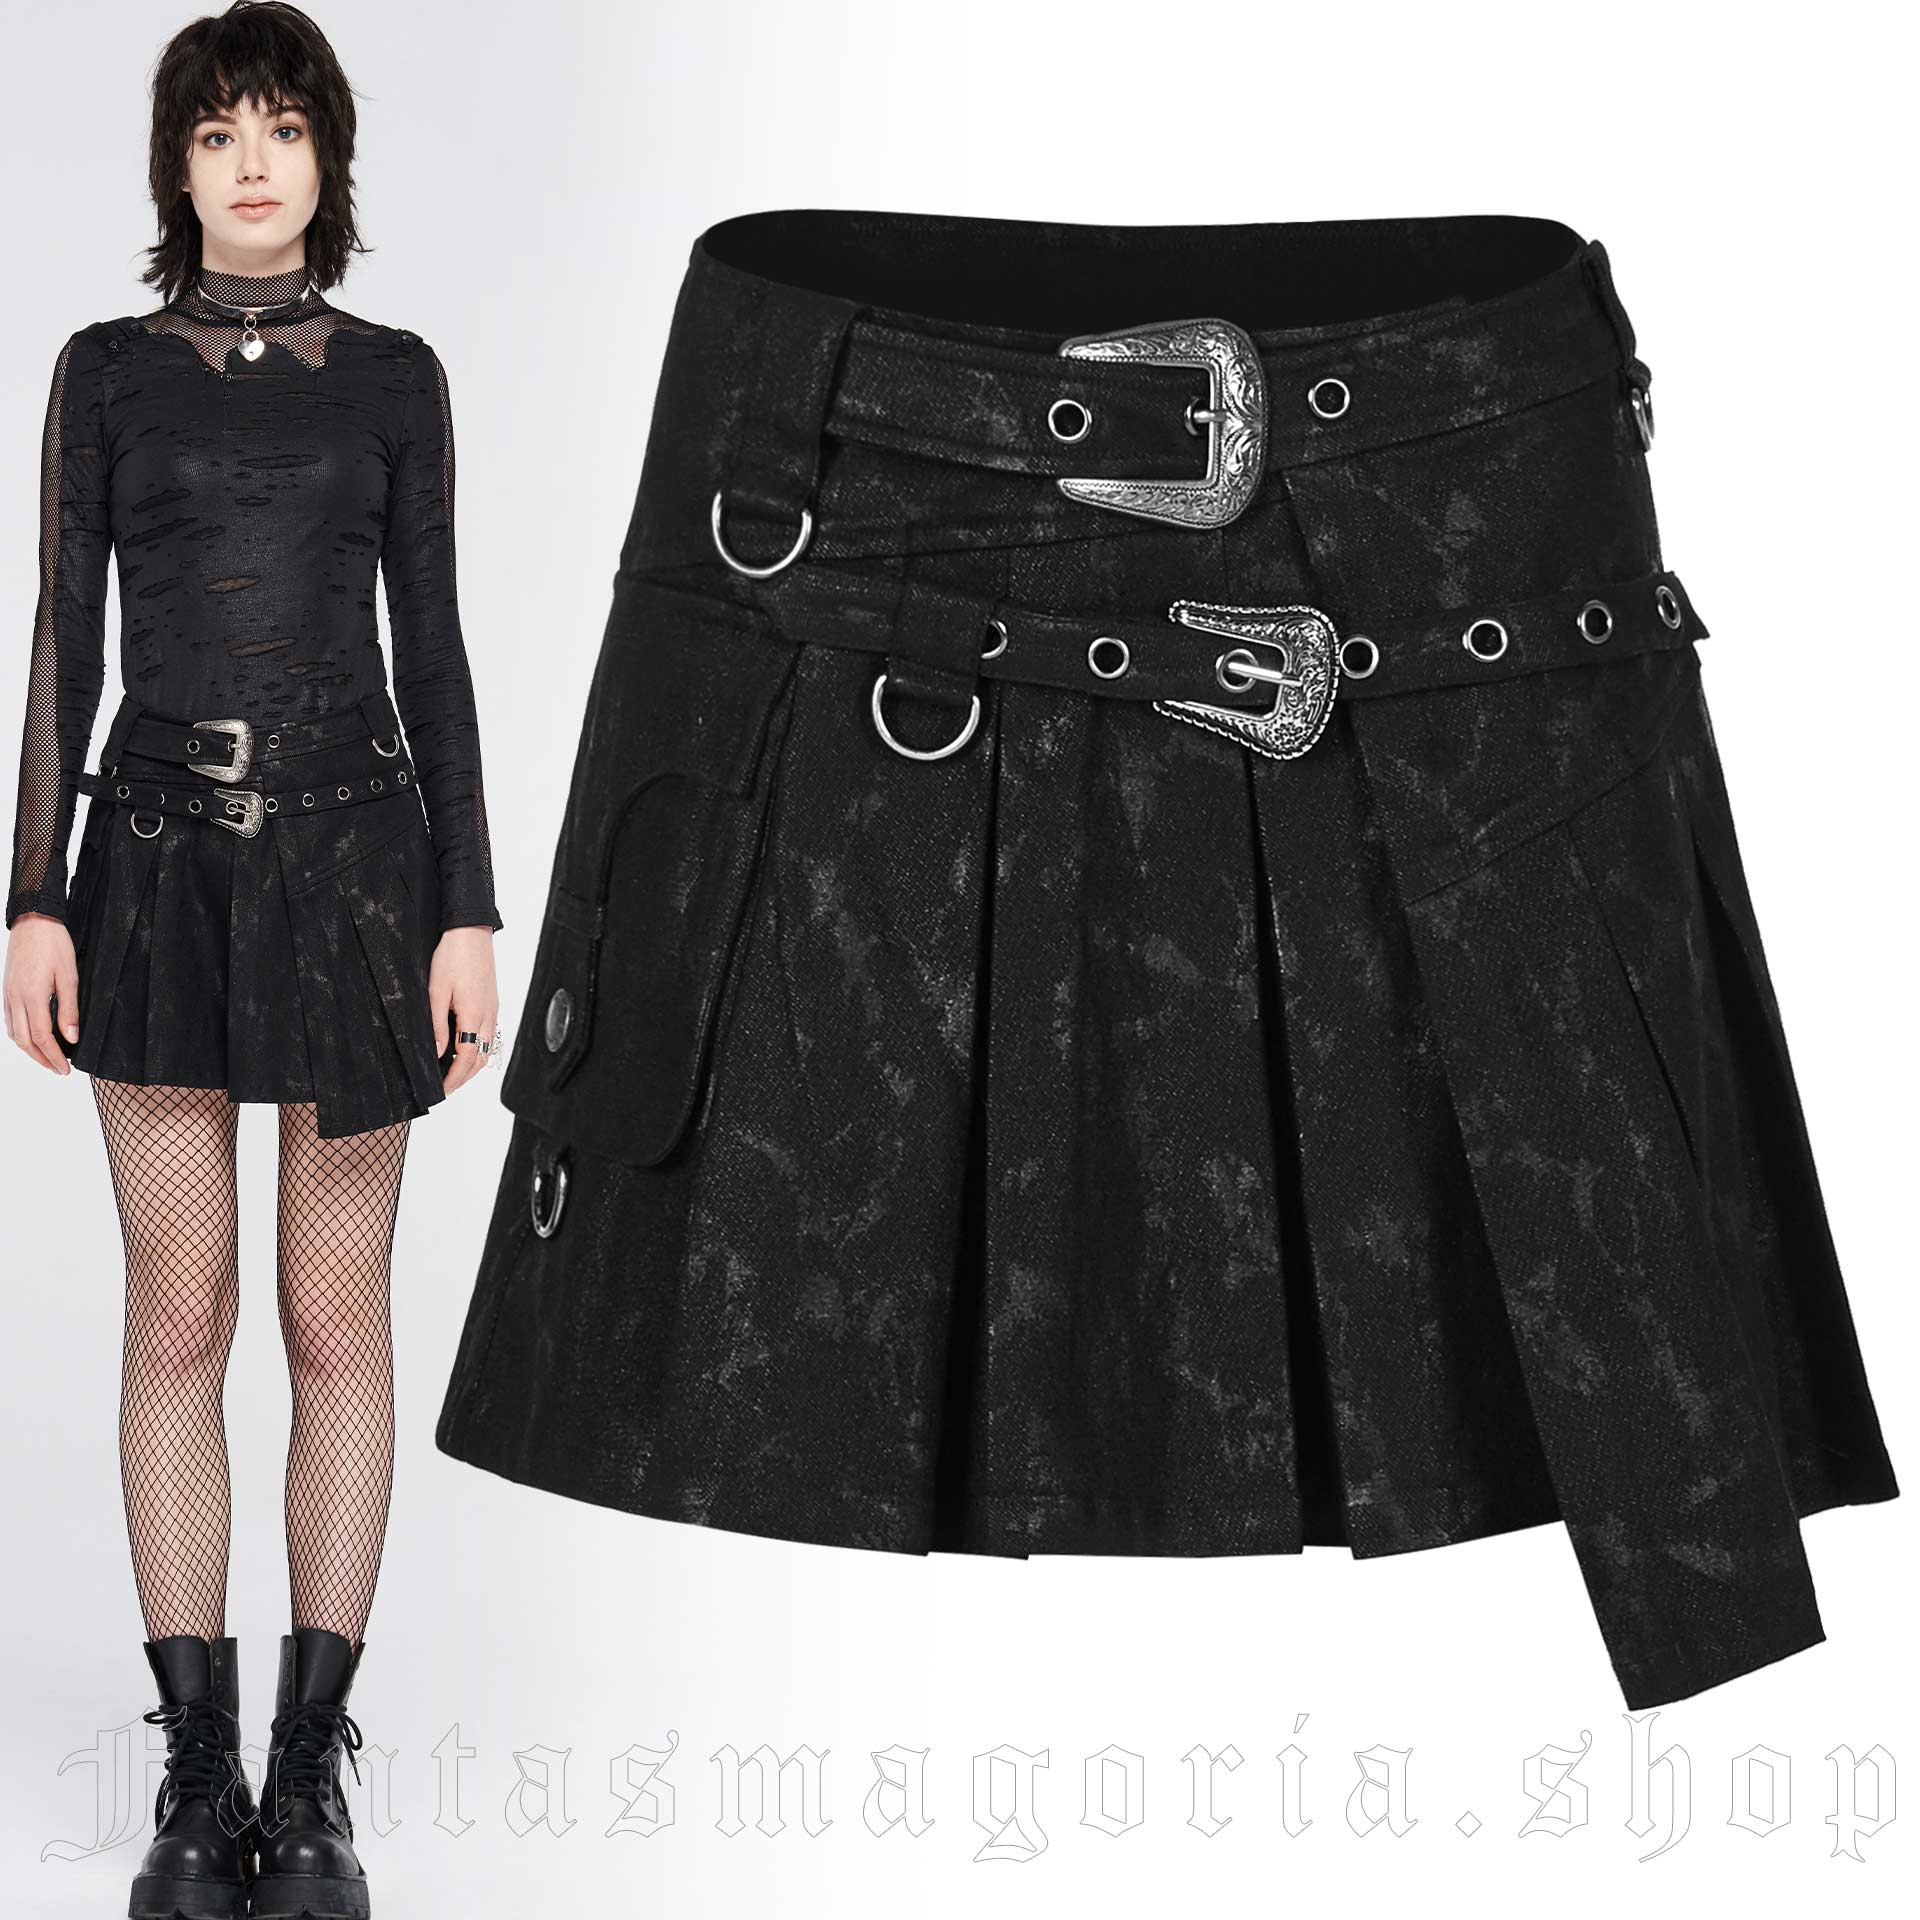 Apocalypto Black Skirt by PUNK RAVE brand